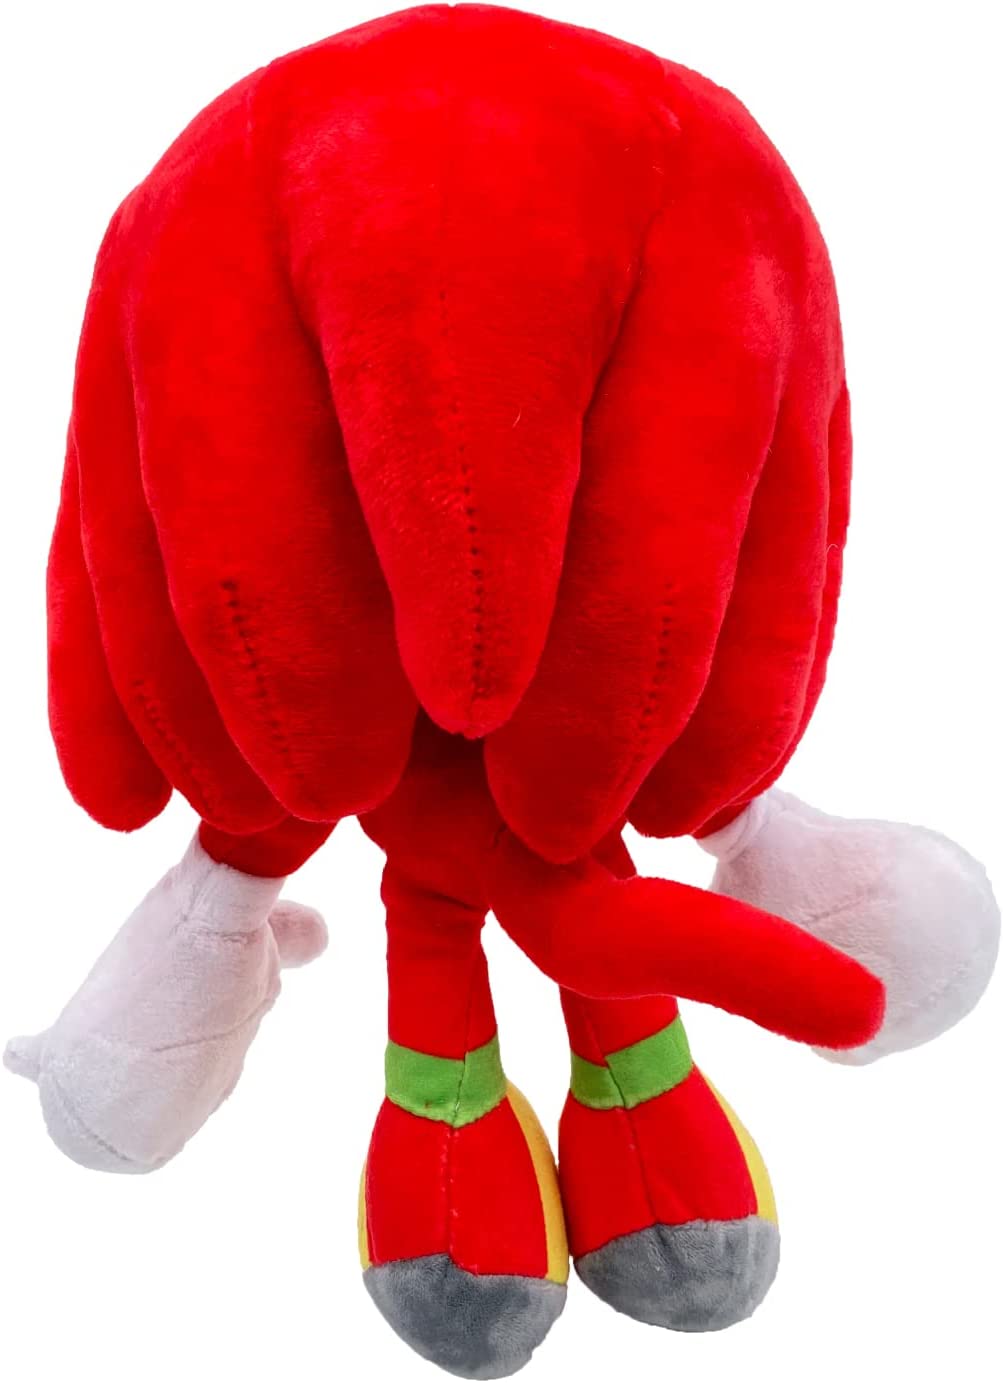 Sonic Plush Toys, Hedgehog Figures Cotton Soft Stuffed Animals Plush Pillow for Boy Girl Birthday